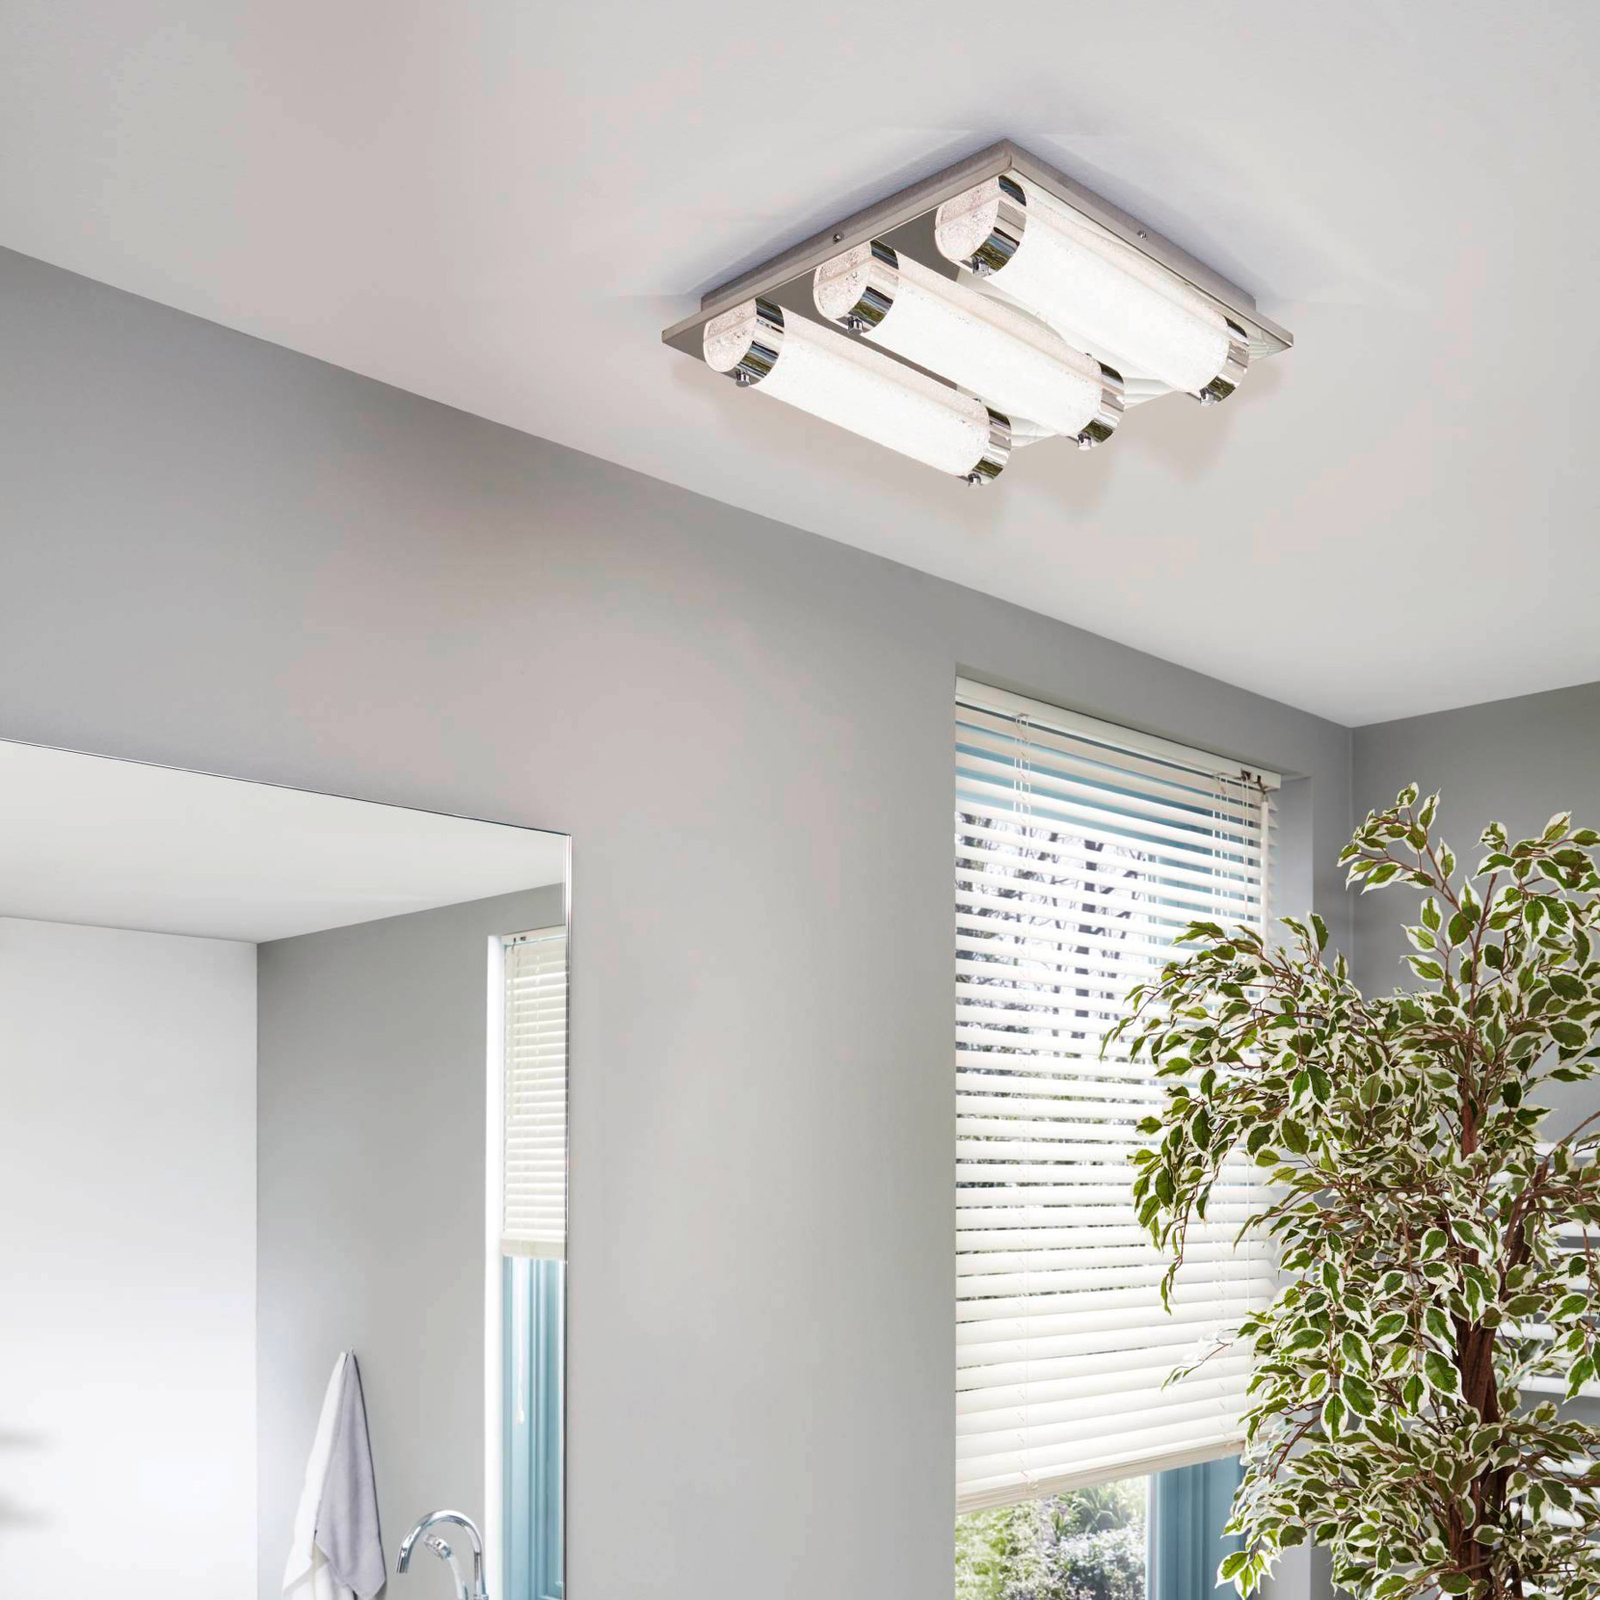 Tolorico LED ceiling light, 35 cm square